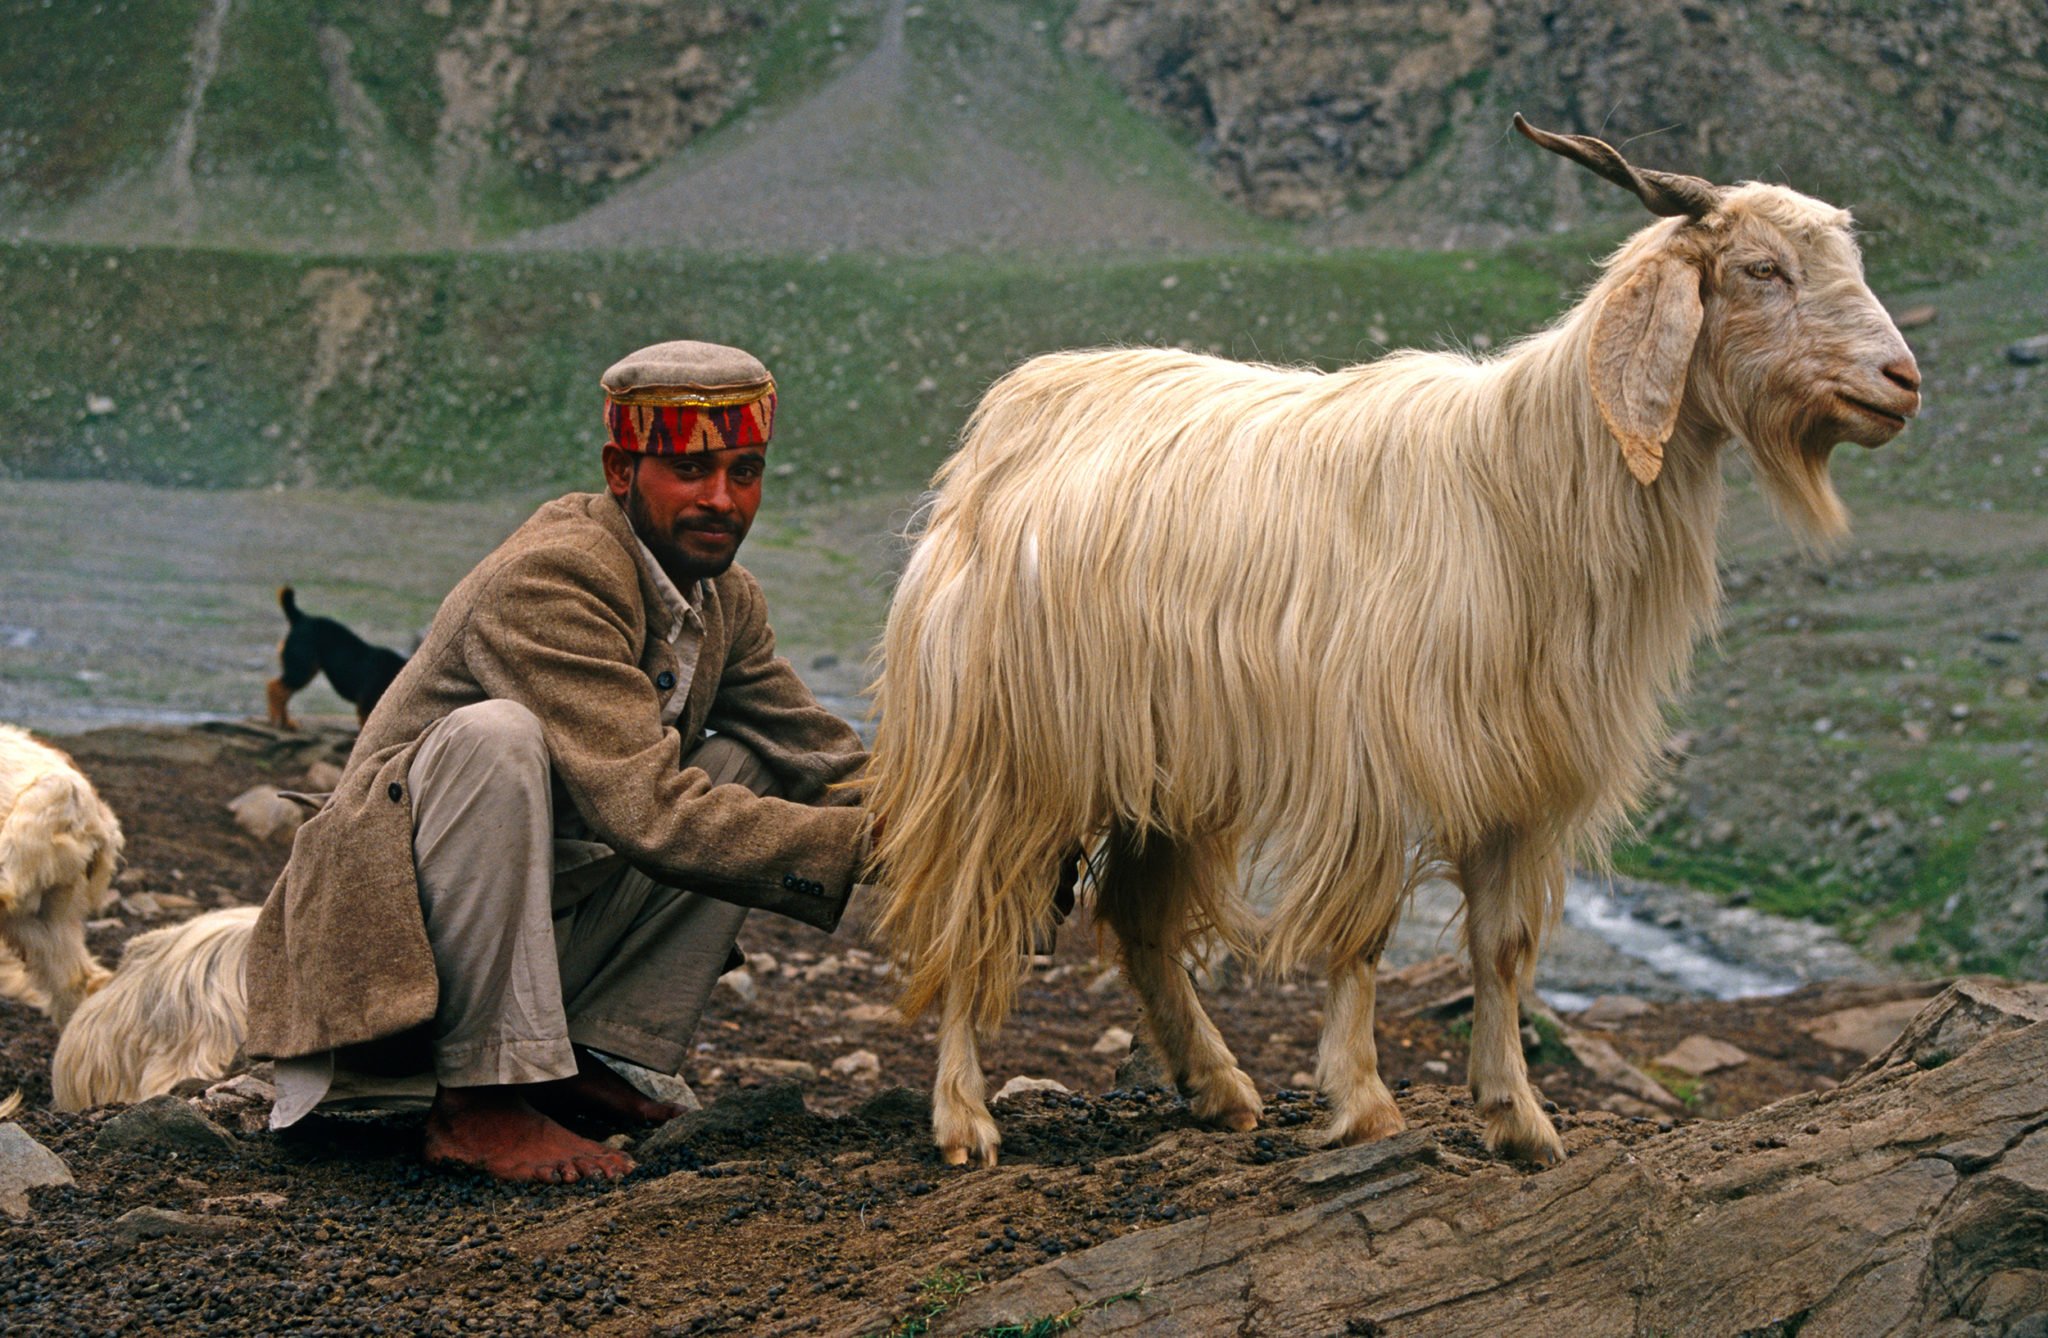 A Gaddi milks a goat in Chamba valley, Himachal Pradesh [Image by: Alamy]